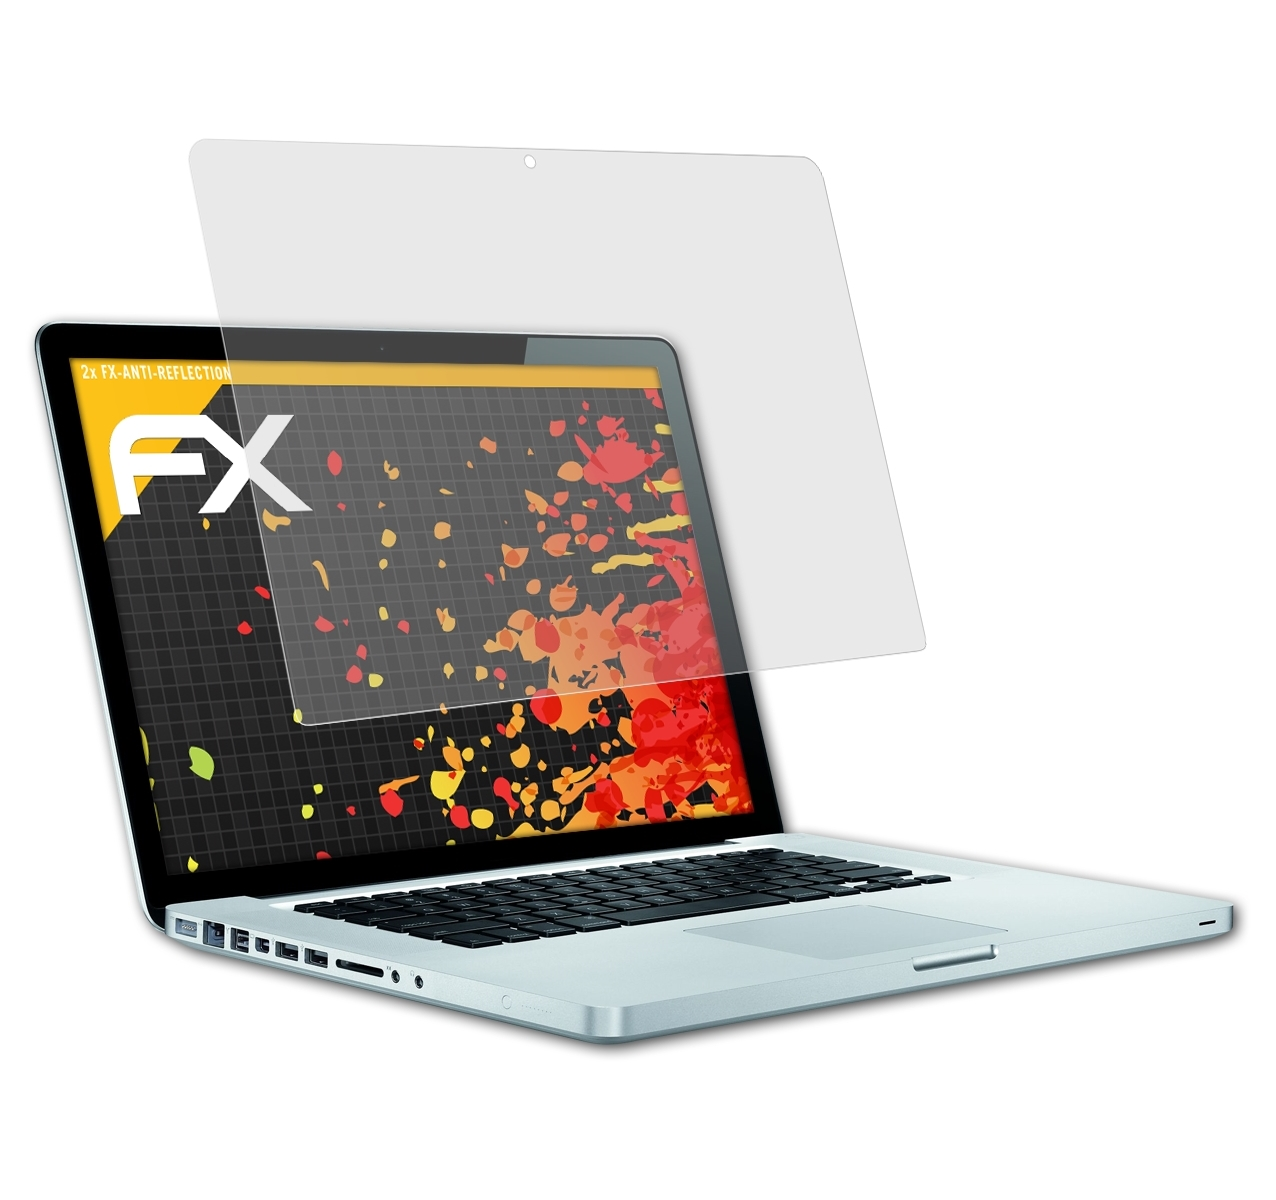 ATFOLIX 2x FX-Antireflex Apple 15,4 Pro Displayschutz(für WXGA) MacBook